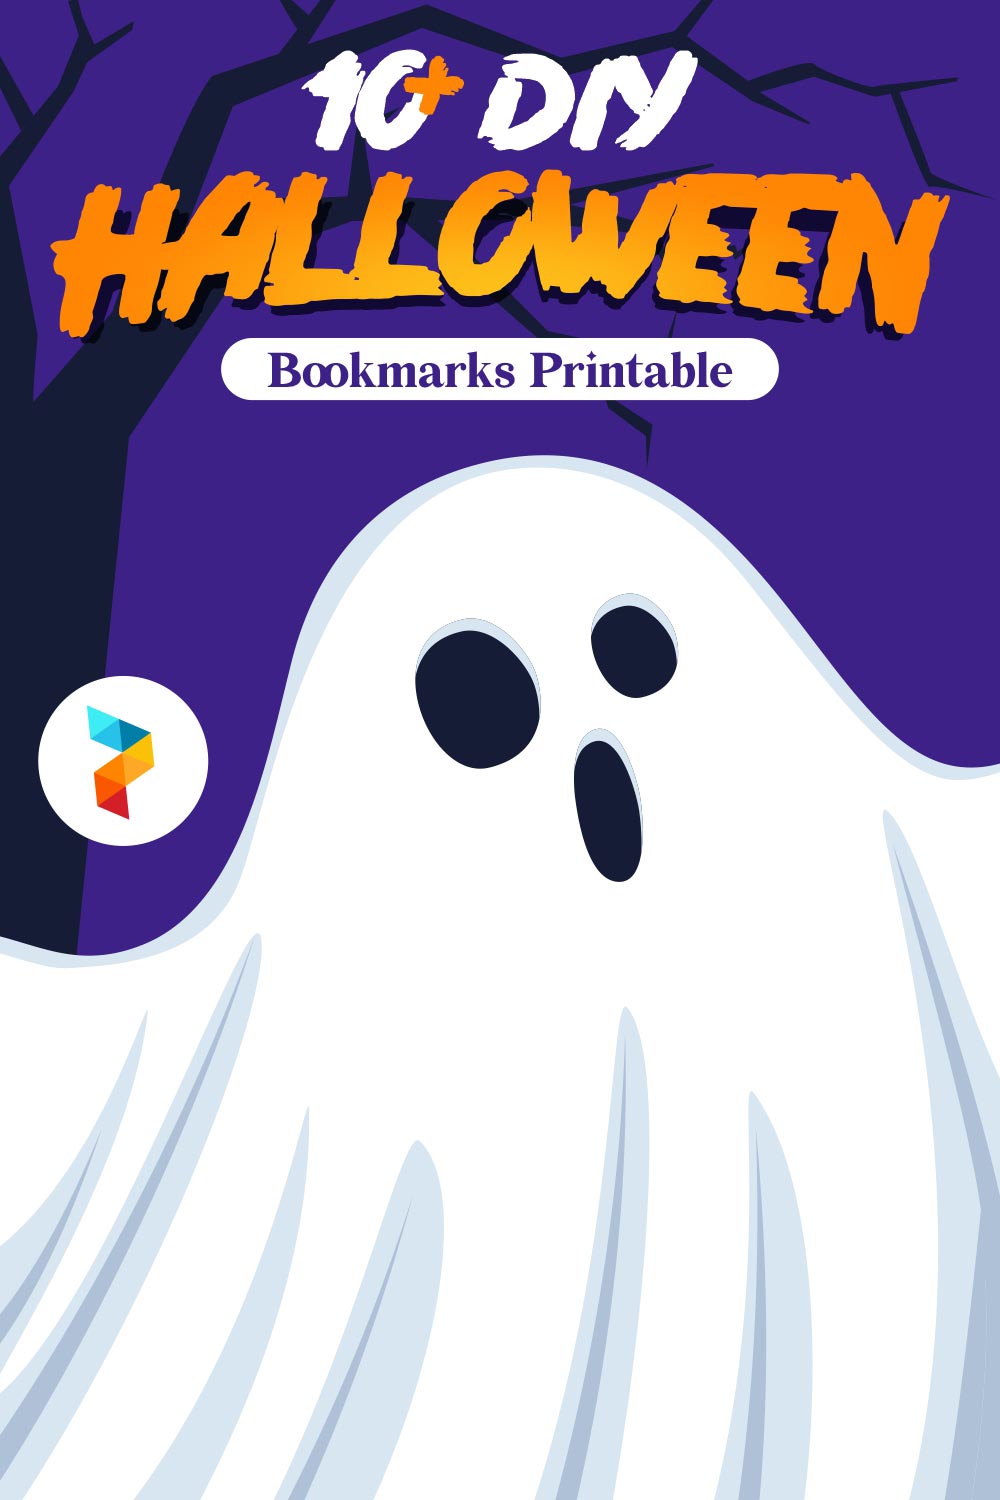 DIY Halloween Bookmarks Printable